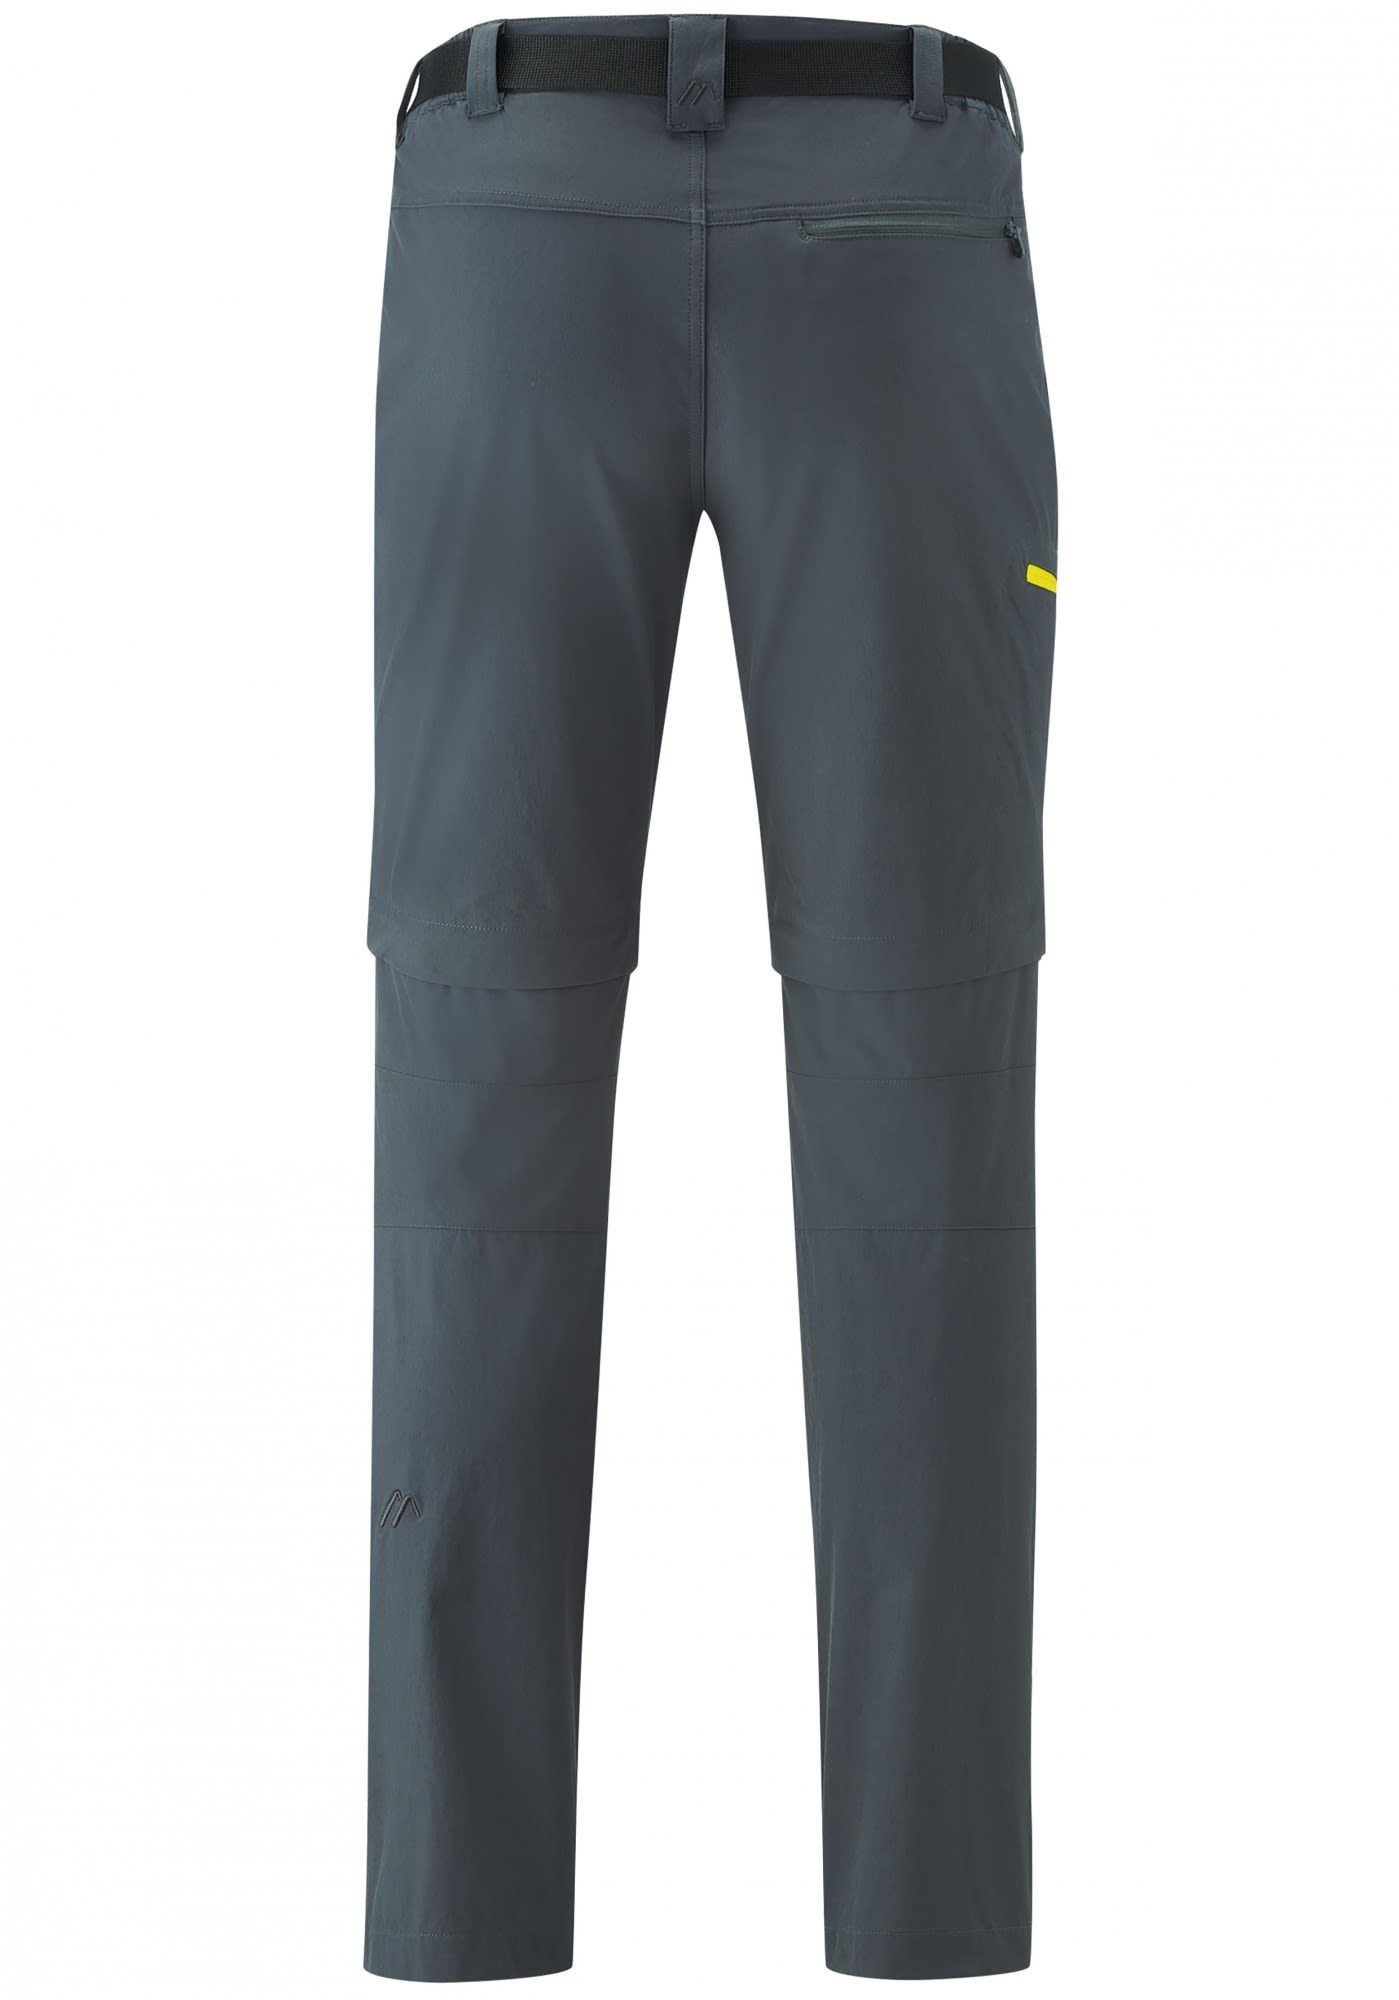 Maier Sports Funktionshose Tajo 15 Outdoorhose mit flexiblem Hosenbund,  Vielseitige atmungsaktive Herren Zip-Off Hose | Outdoorhosen